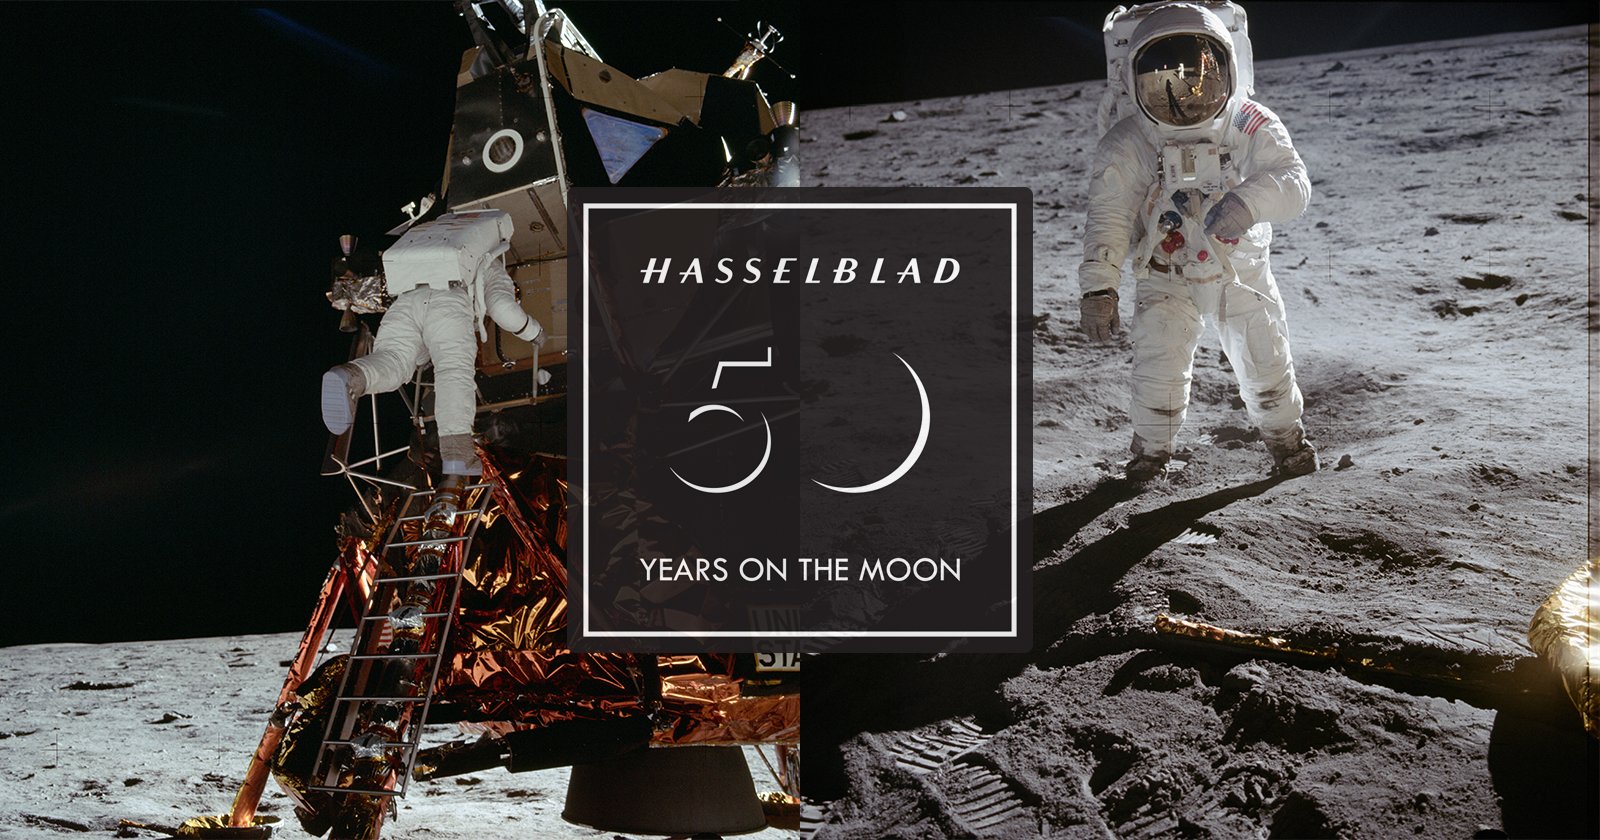 Read Hasselblad's Moon Landing Press Release from 1969 | PetaPixel